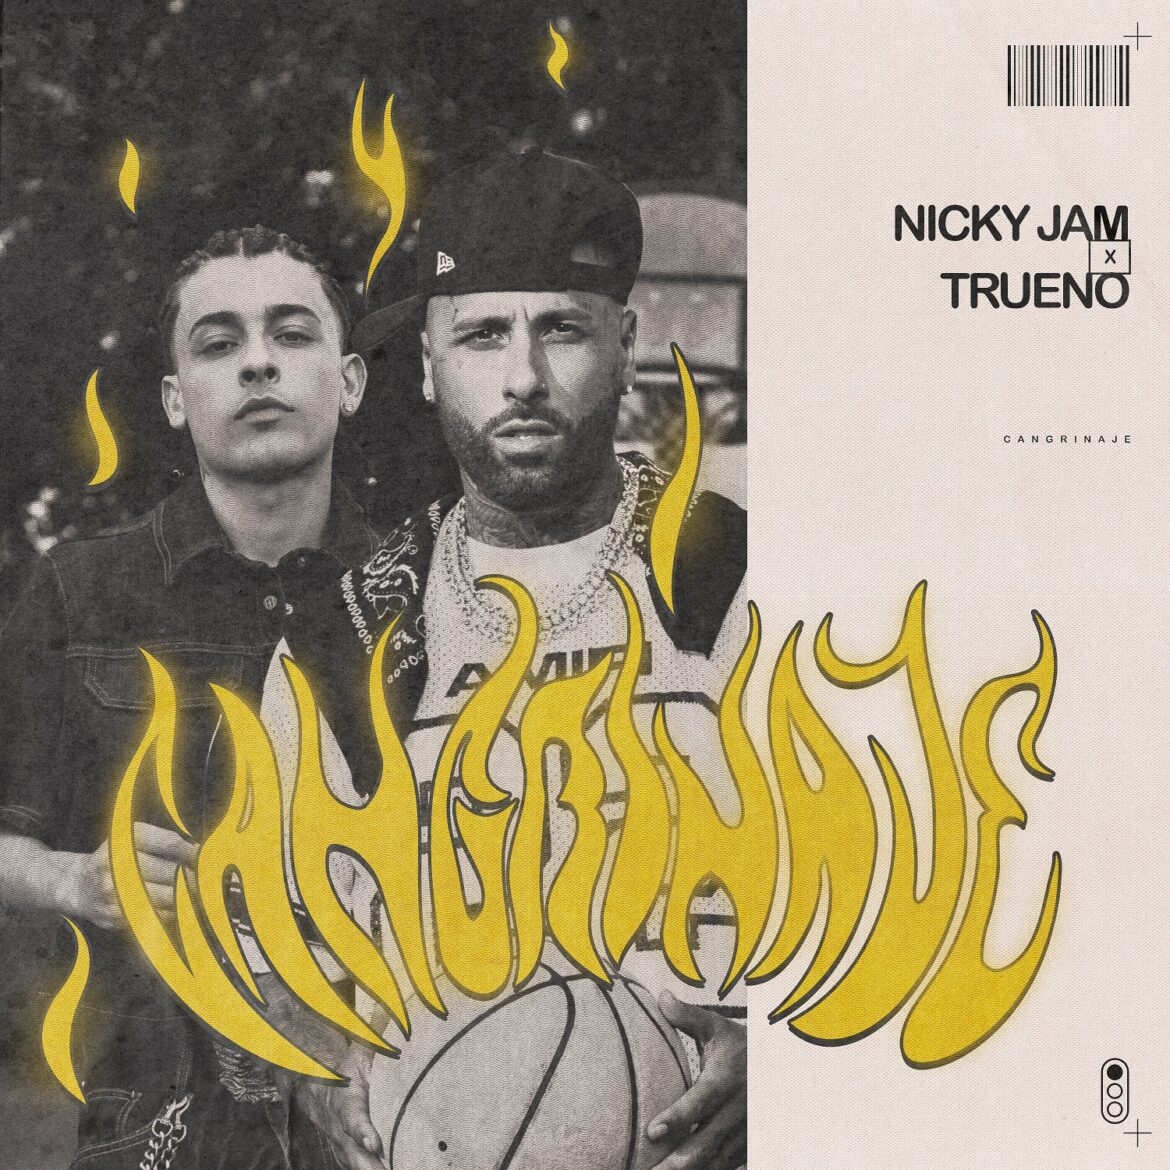 Nicky Jam regresa al reggaetón “old school” con “Cangrinaje” feat. Trueno